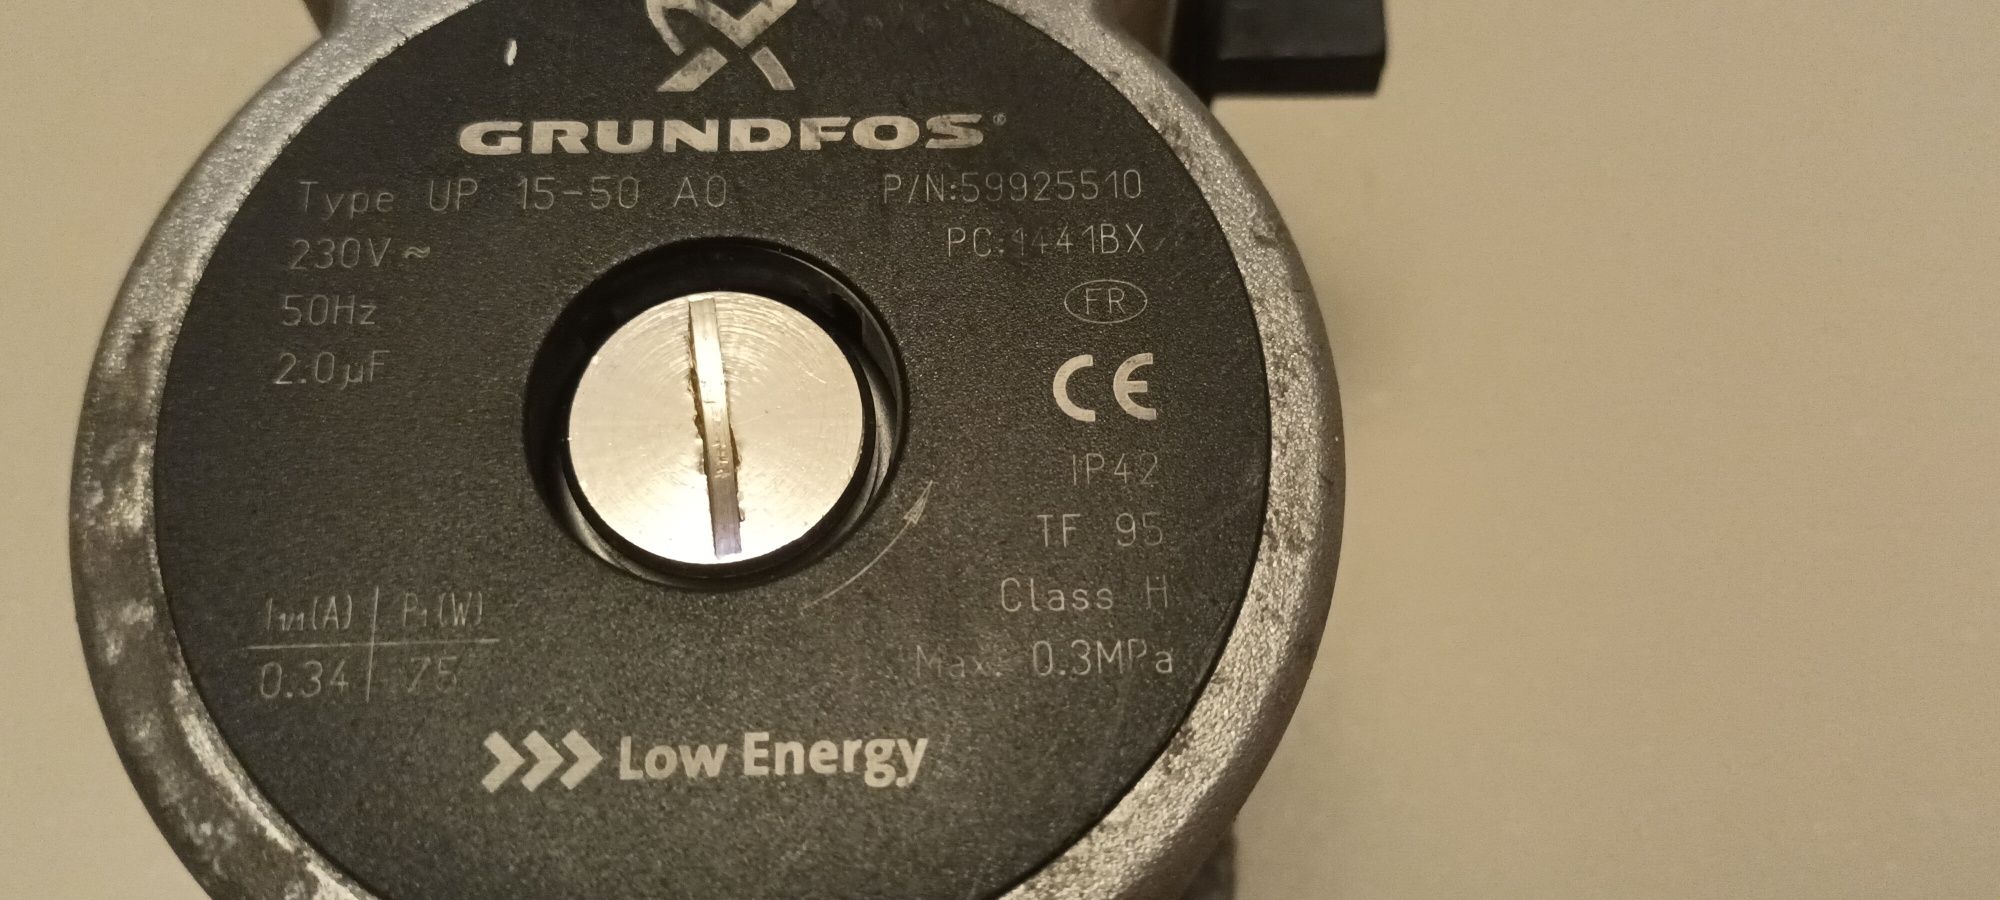 Pompa Grundfos UP 16-50 AO  Brotje Energy top